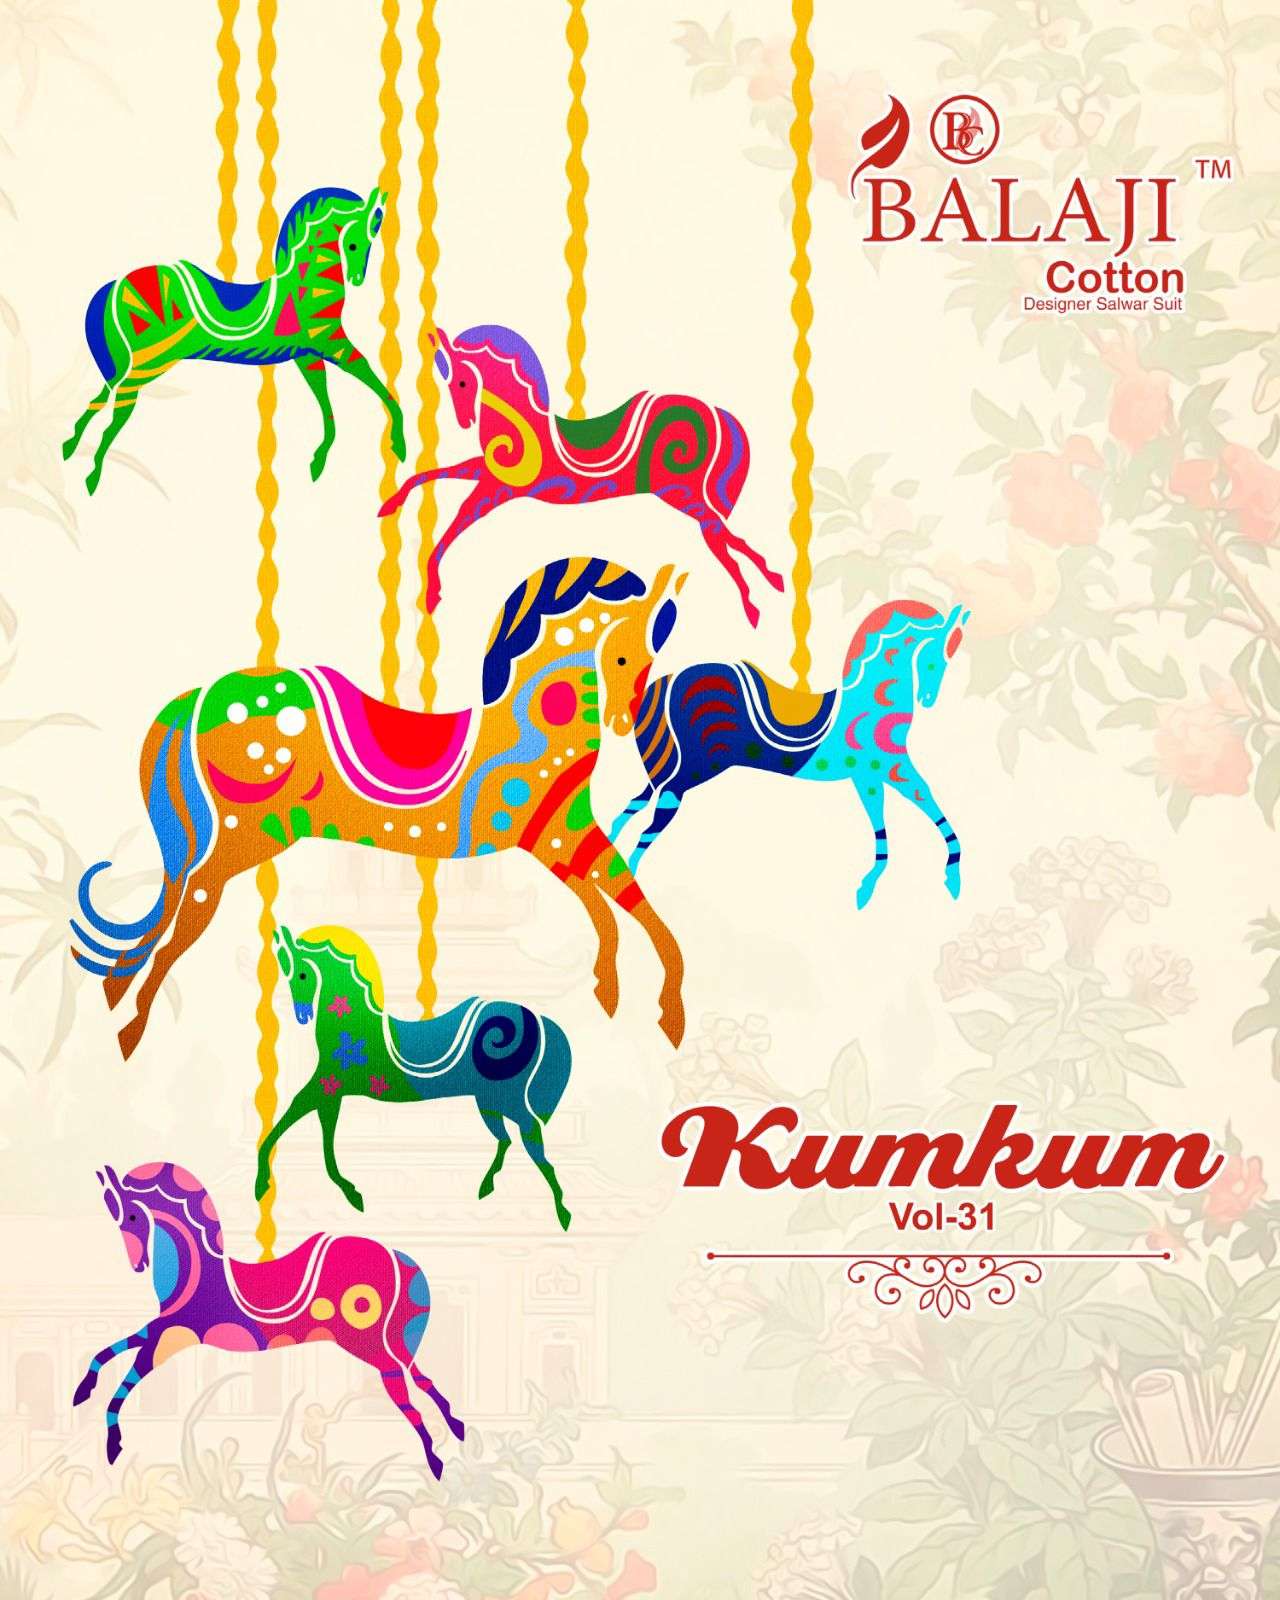 Balaji Kumkum vol-31 series 3101-3120 Pure Cotton suit